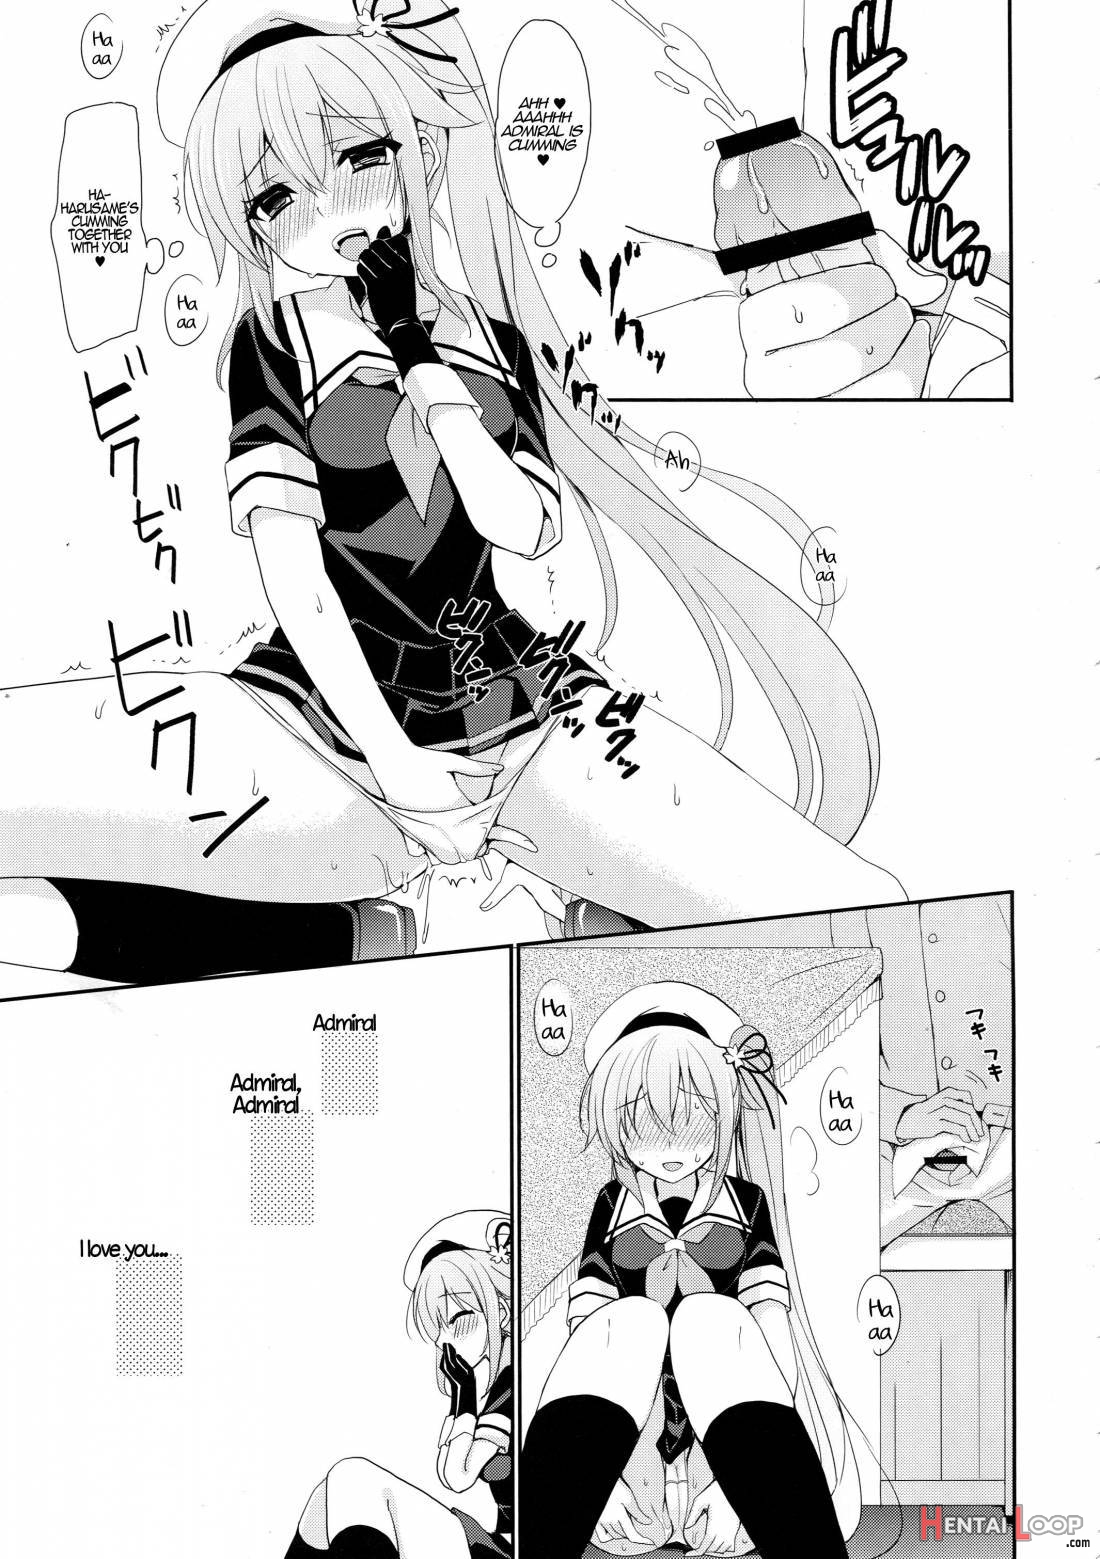 Stalker Harusame-chan page 8